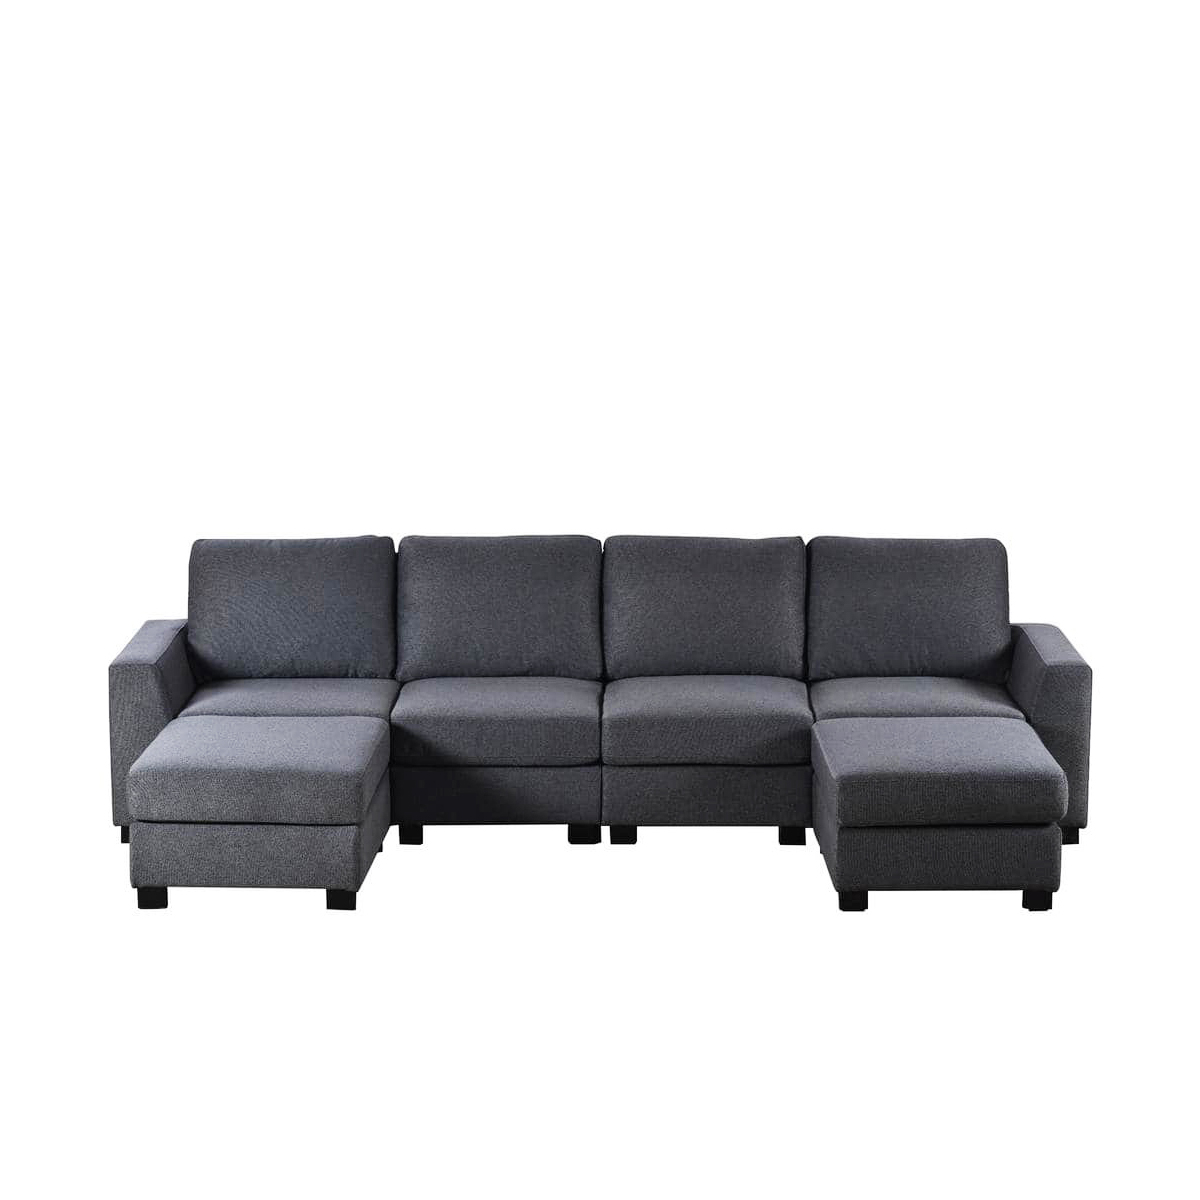 gray-harper-bright-designs-sectional-sofas-wyt104aae-1f_1000.jpg